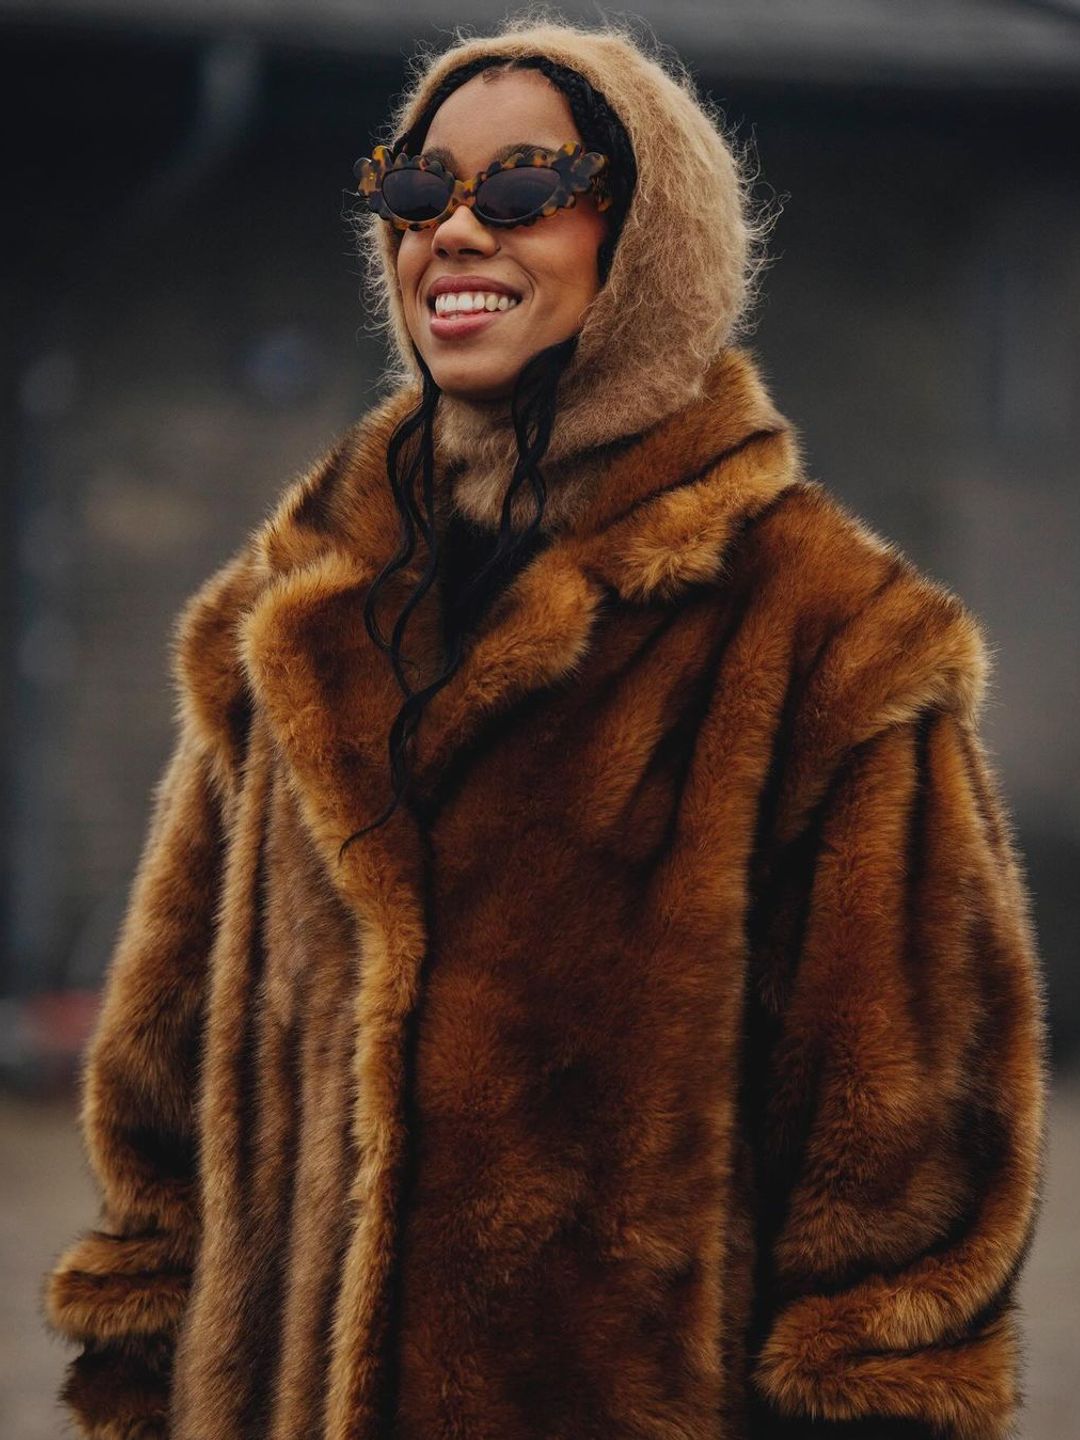 @amaka.hamelijnck wears a fur coat, hood and sunglasses while in Copenhagen for fashion week